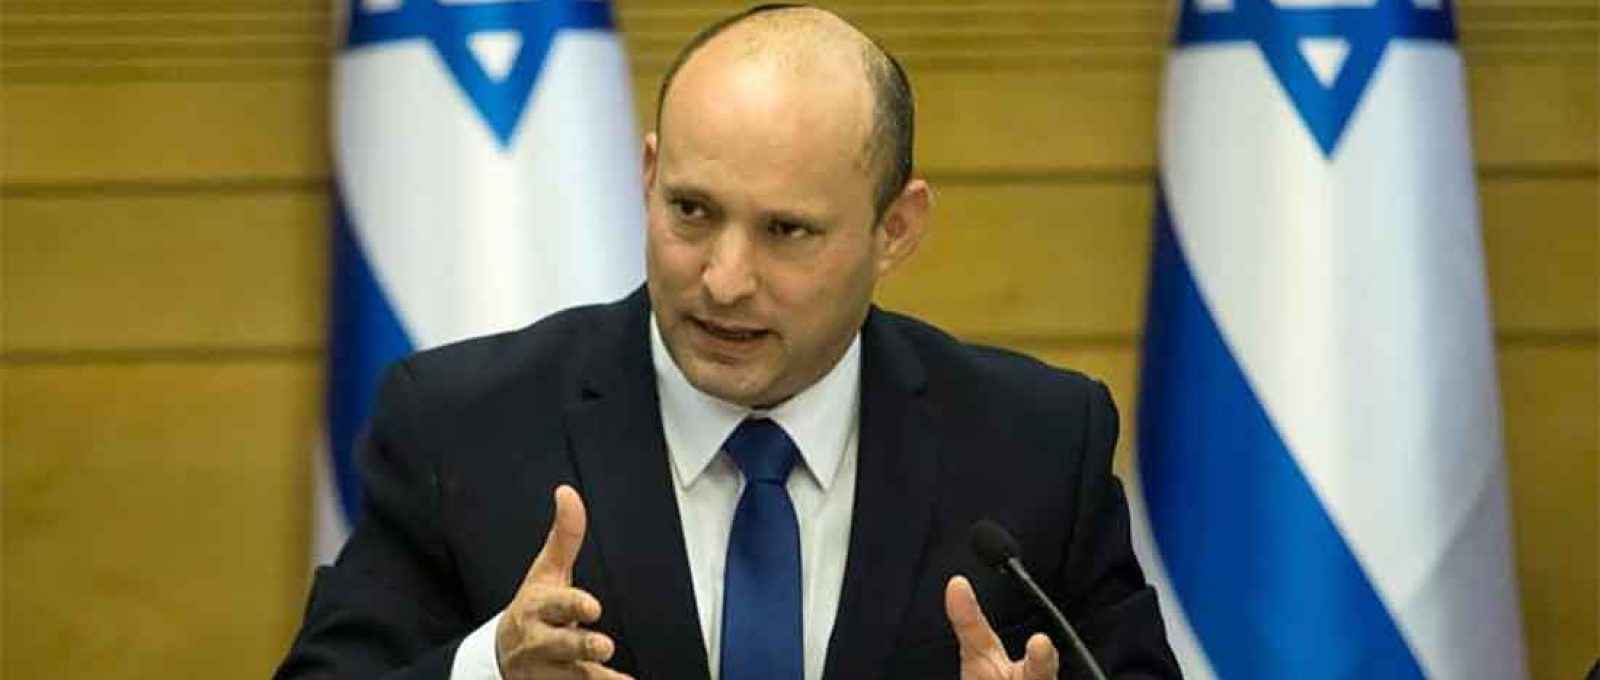 Naftali Bennett, o novo primeiro-ministro de Israel (Foto: Amir Levy/Getty Images).